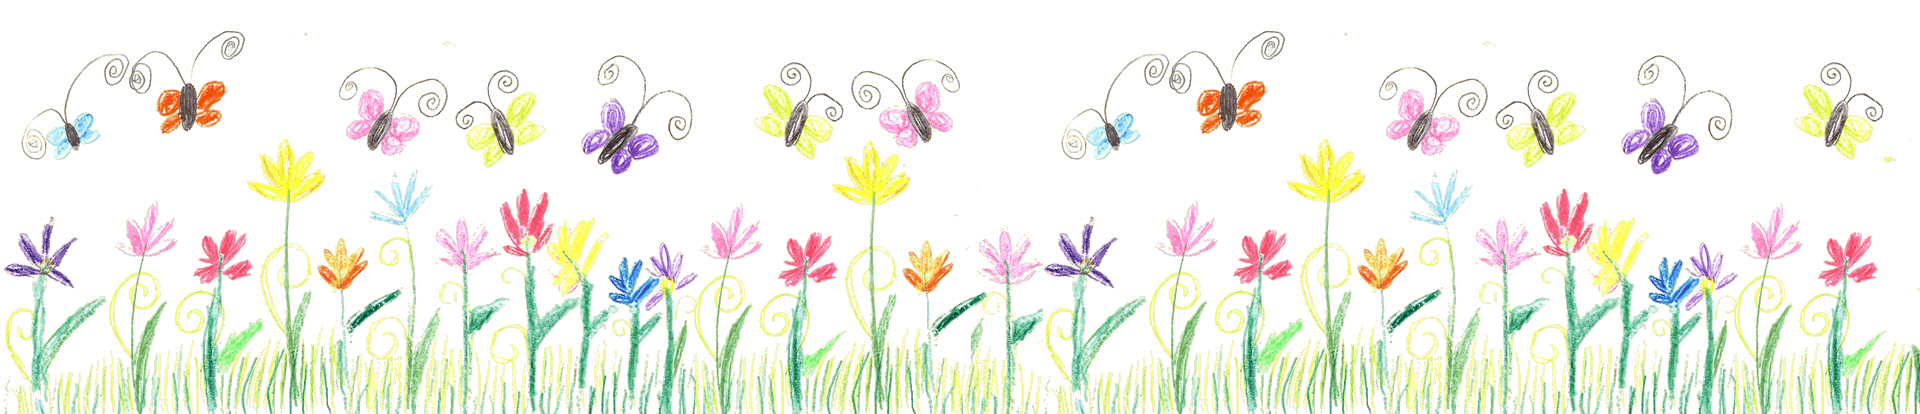 Jardim com borboletas